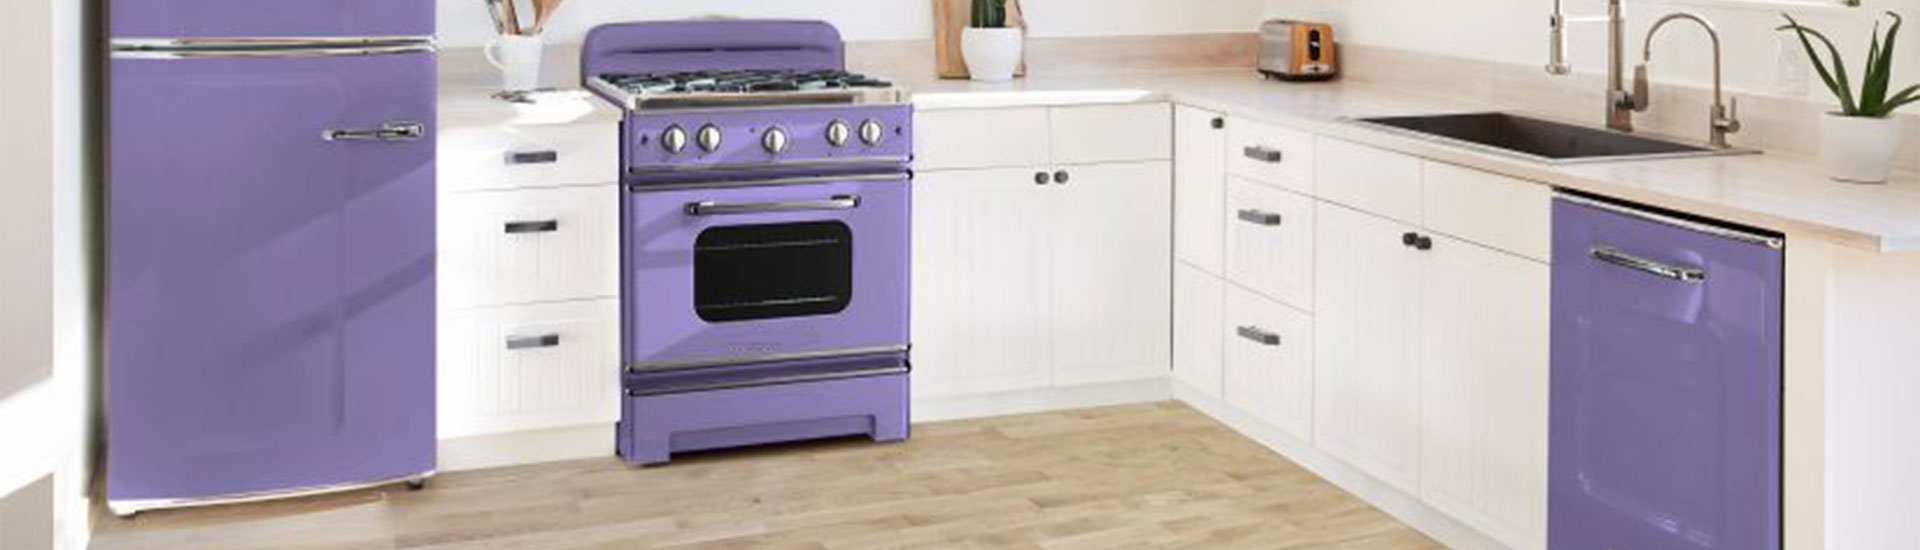 Purple Dishwasher Wraps